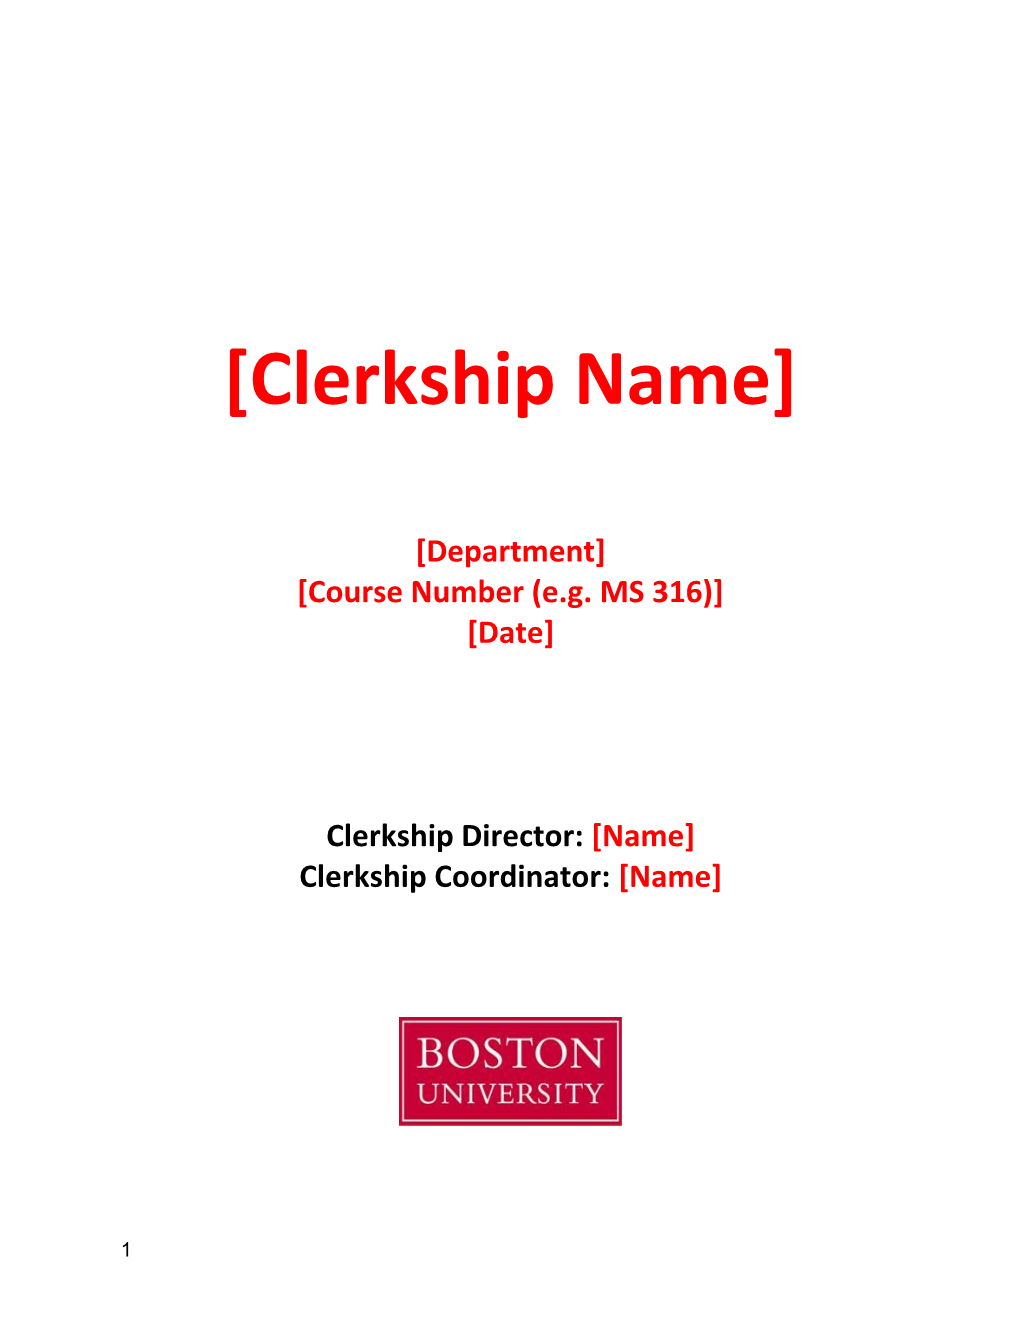 Clerkship Director: Name